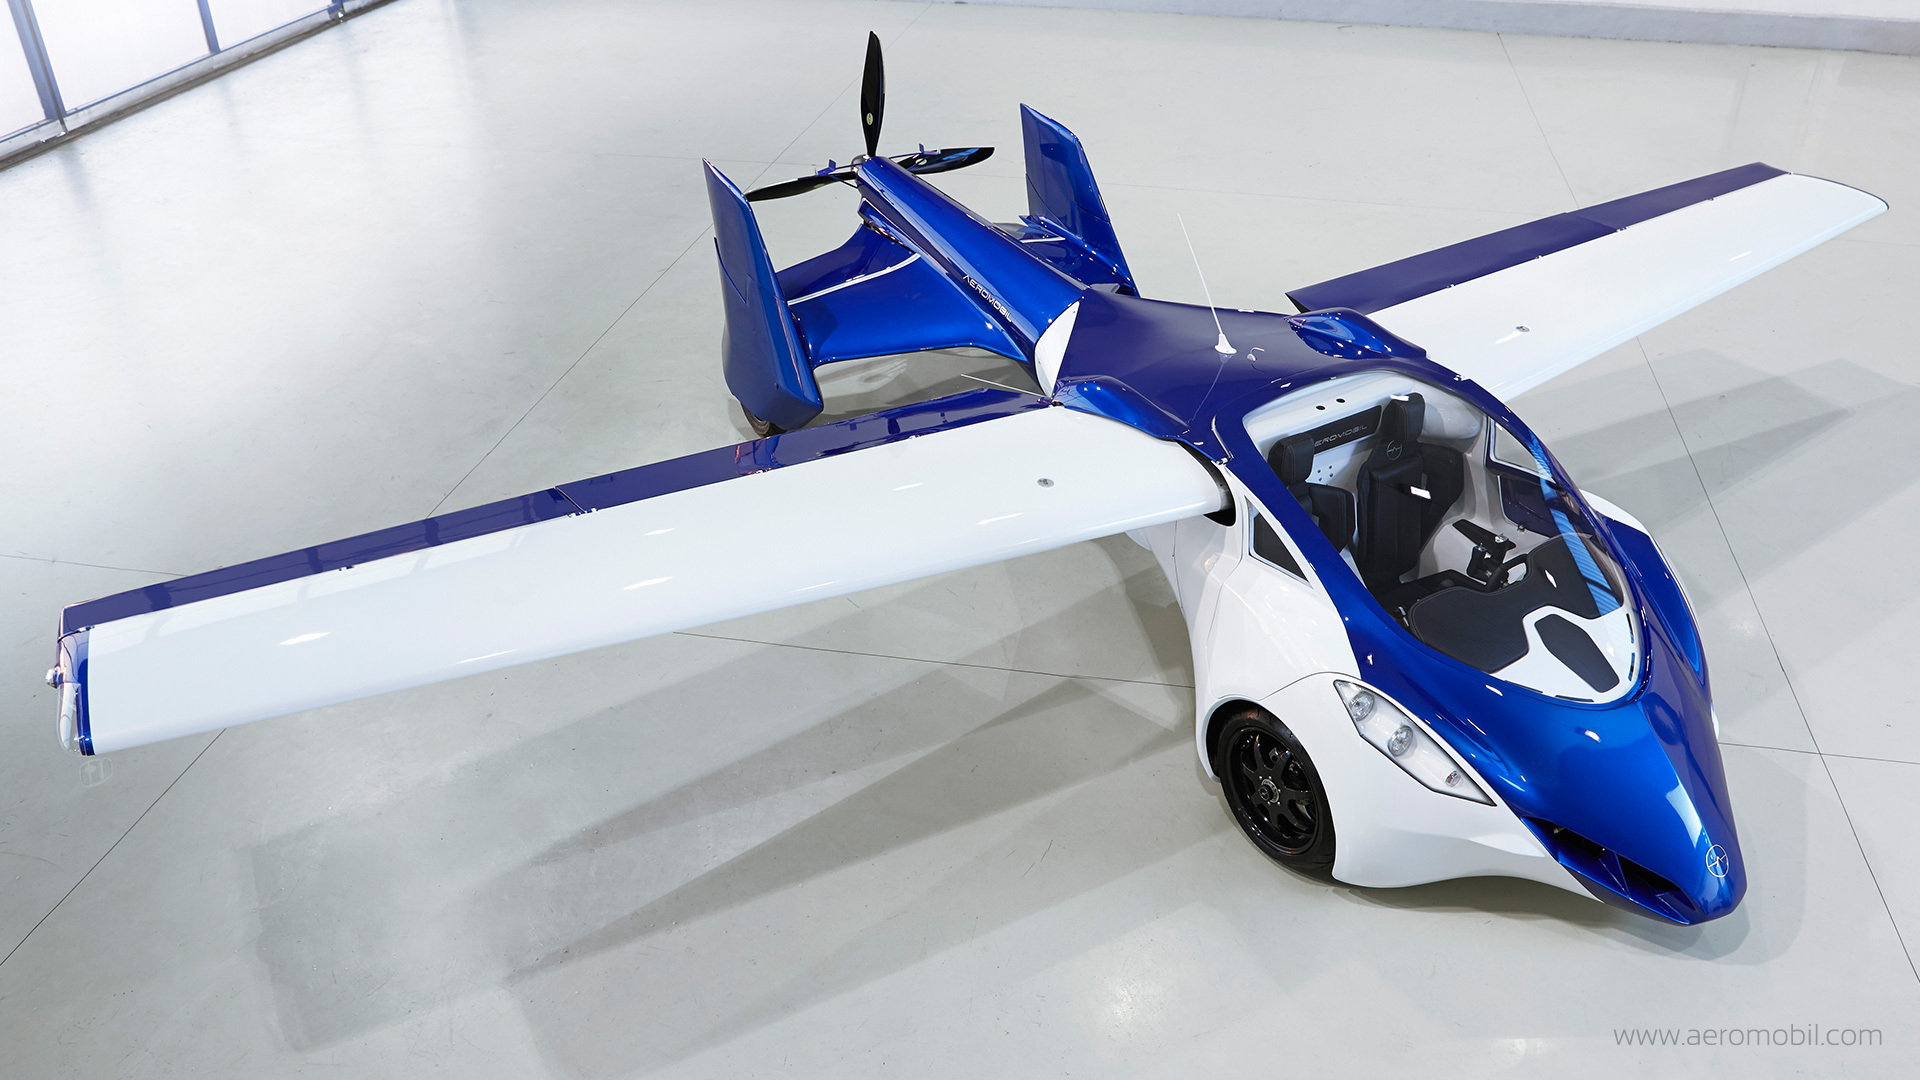 Aeromobil 3.0 flying car prototype